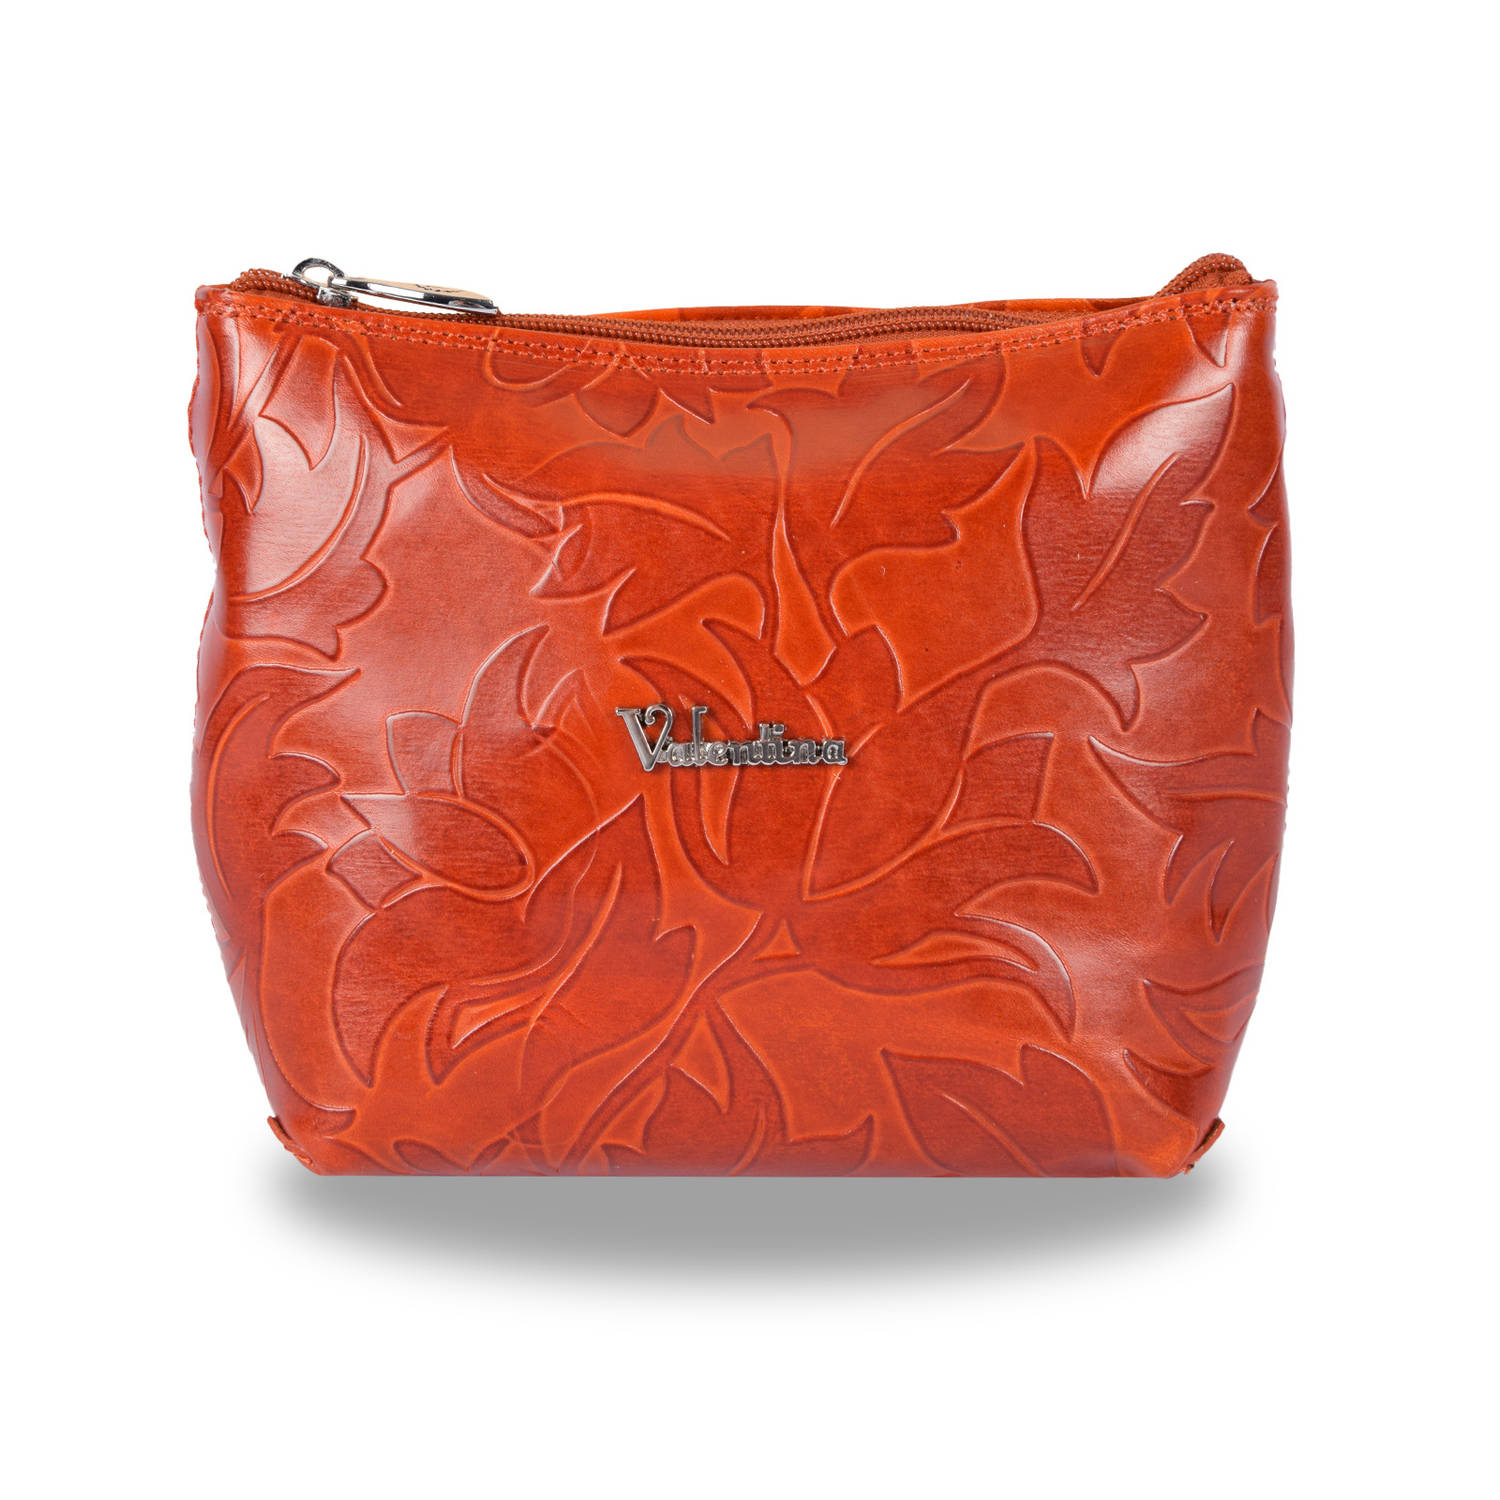 Stijlvolle Rich Oranje Lederen Crossbody Tas met Bloemendesign | Perfect voor Koningsdag | Praktisch & Uniek Koningsdag Accessoires